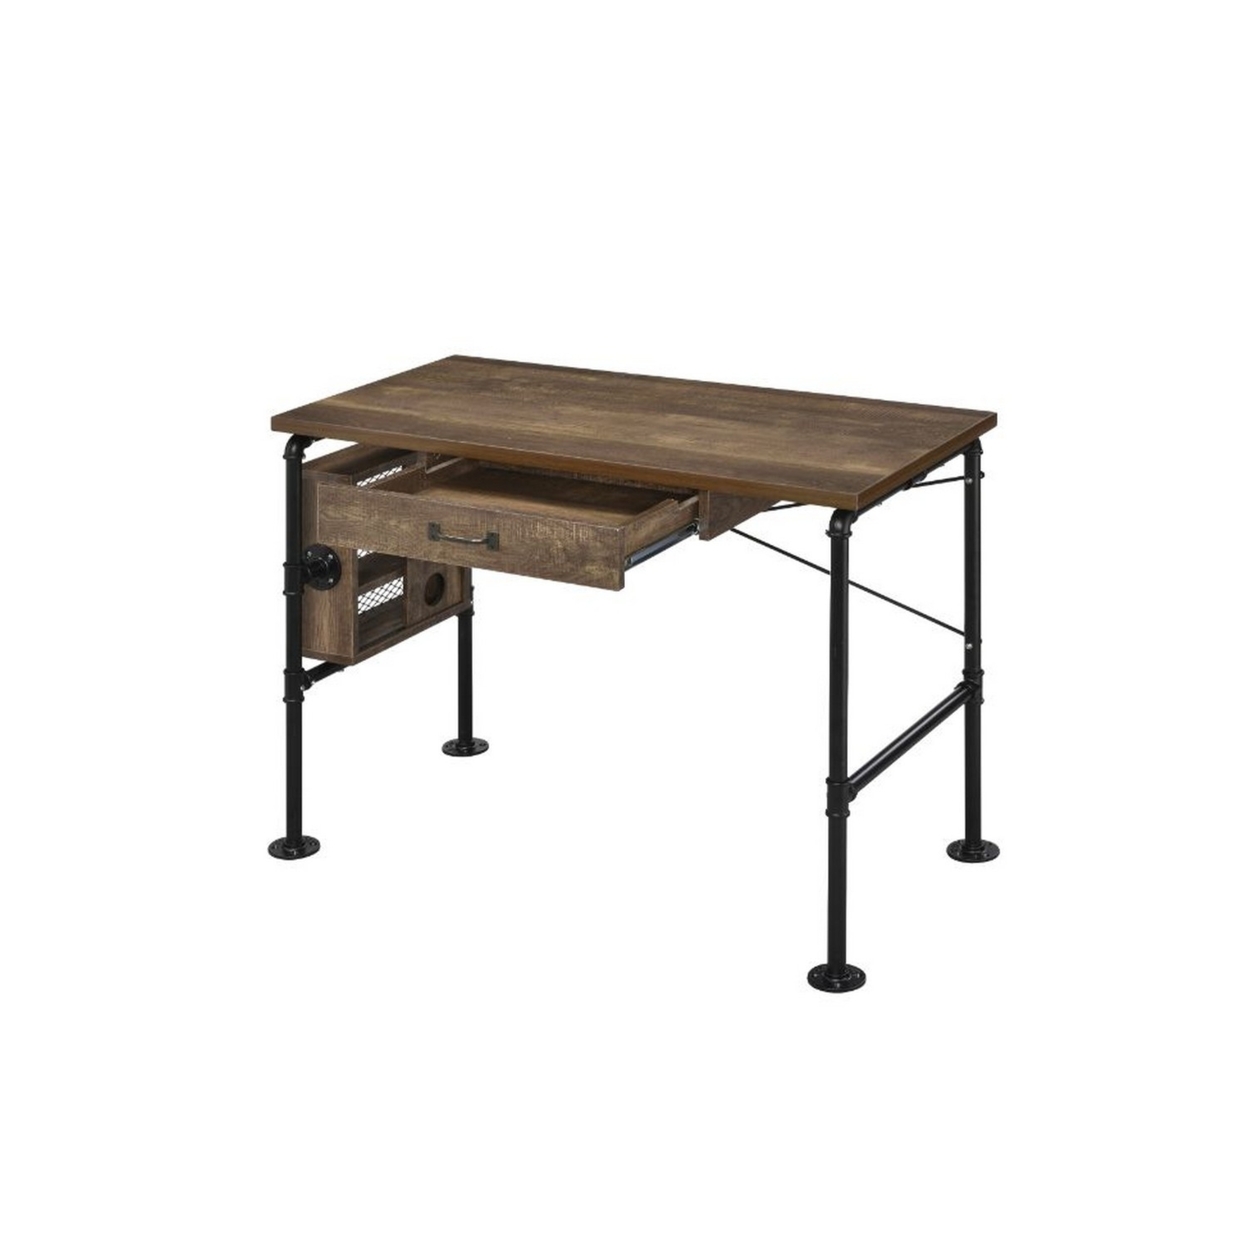 Writing Desk With Industrial Style And 3 Tier Sleek Side Shelves, Oak Brown- Saltoro Sherpi